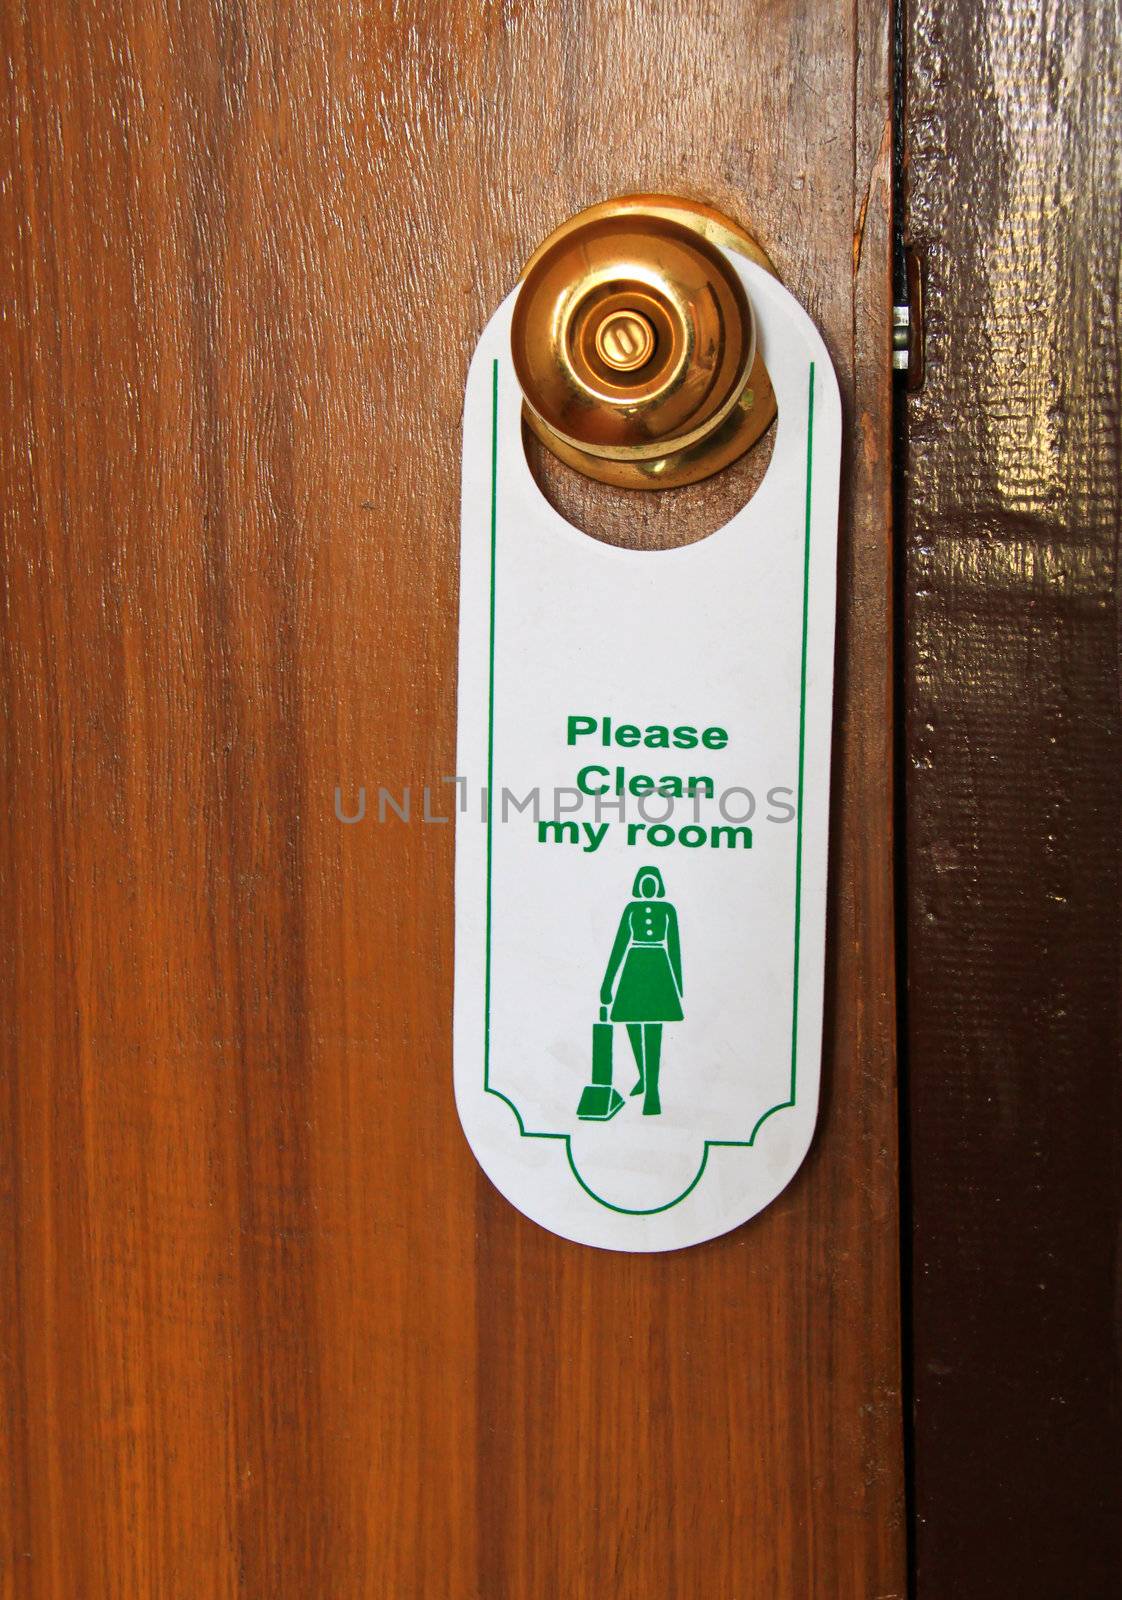 please clean my room hotel tag hanging on door knob by nuchylee